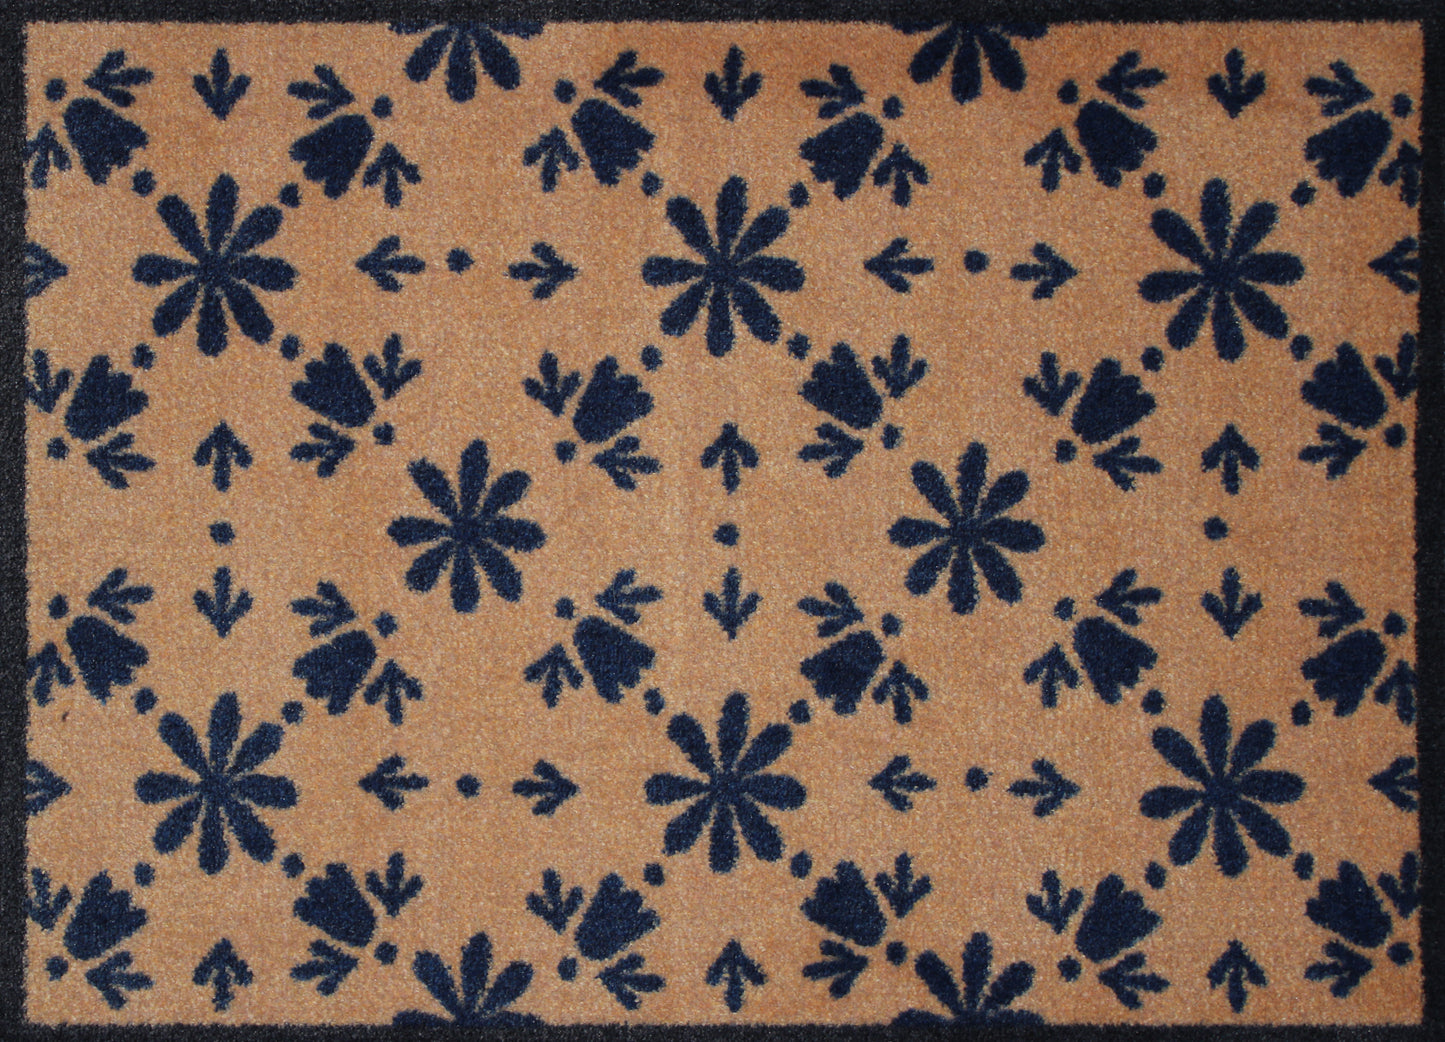 Italian Tile